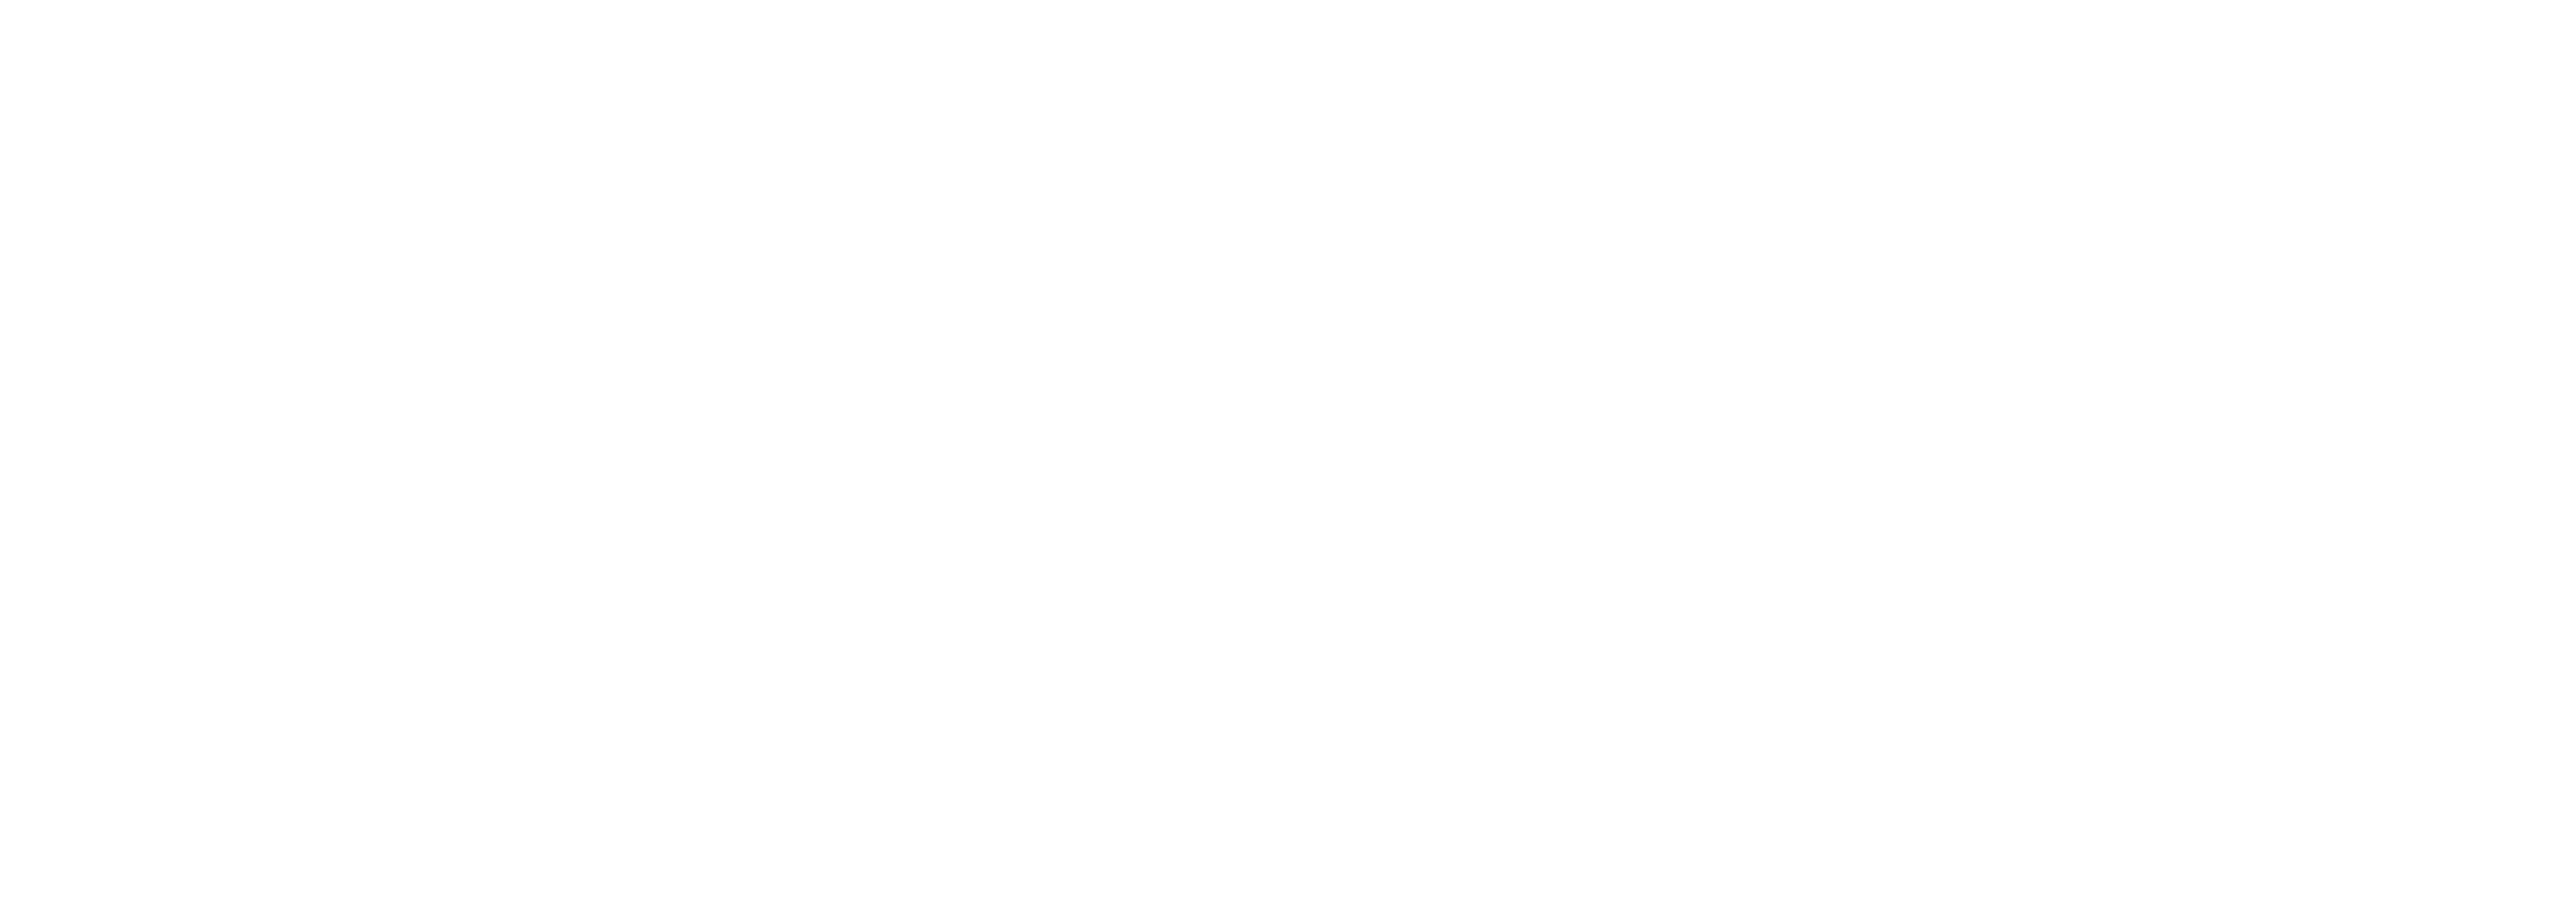 LeadandInkPublishingServices-logo-white